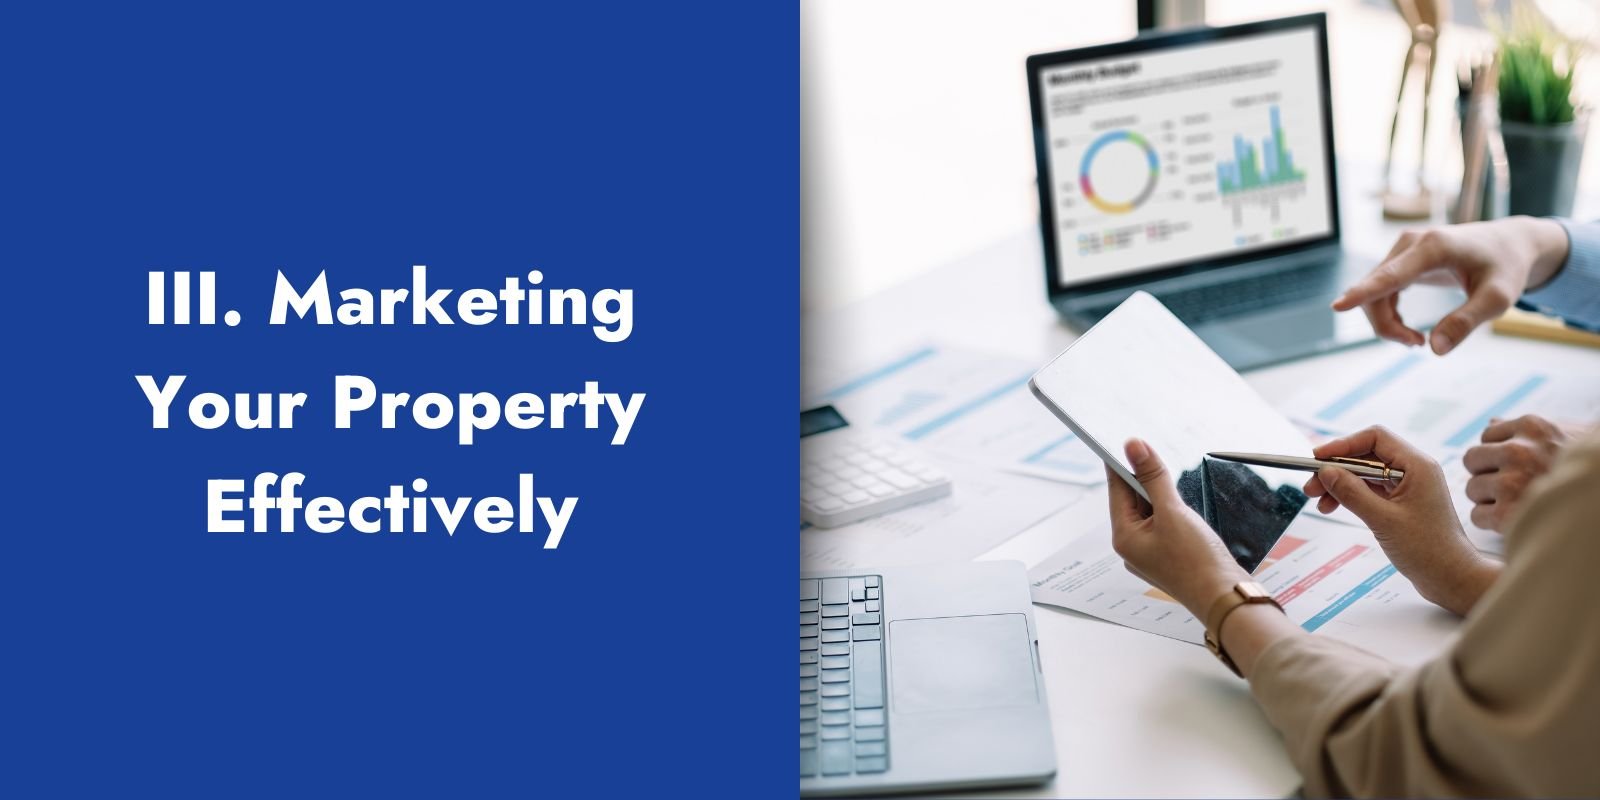 III. Marketing Your Property Effectively